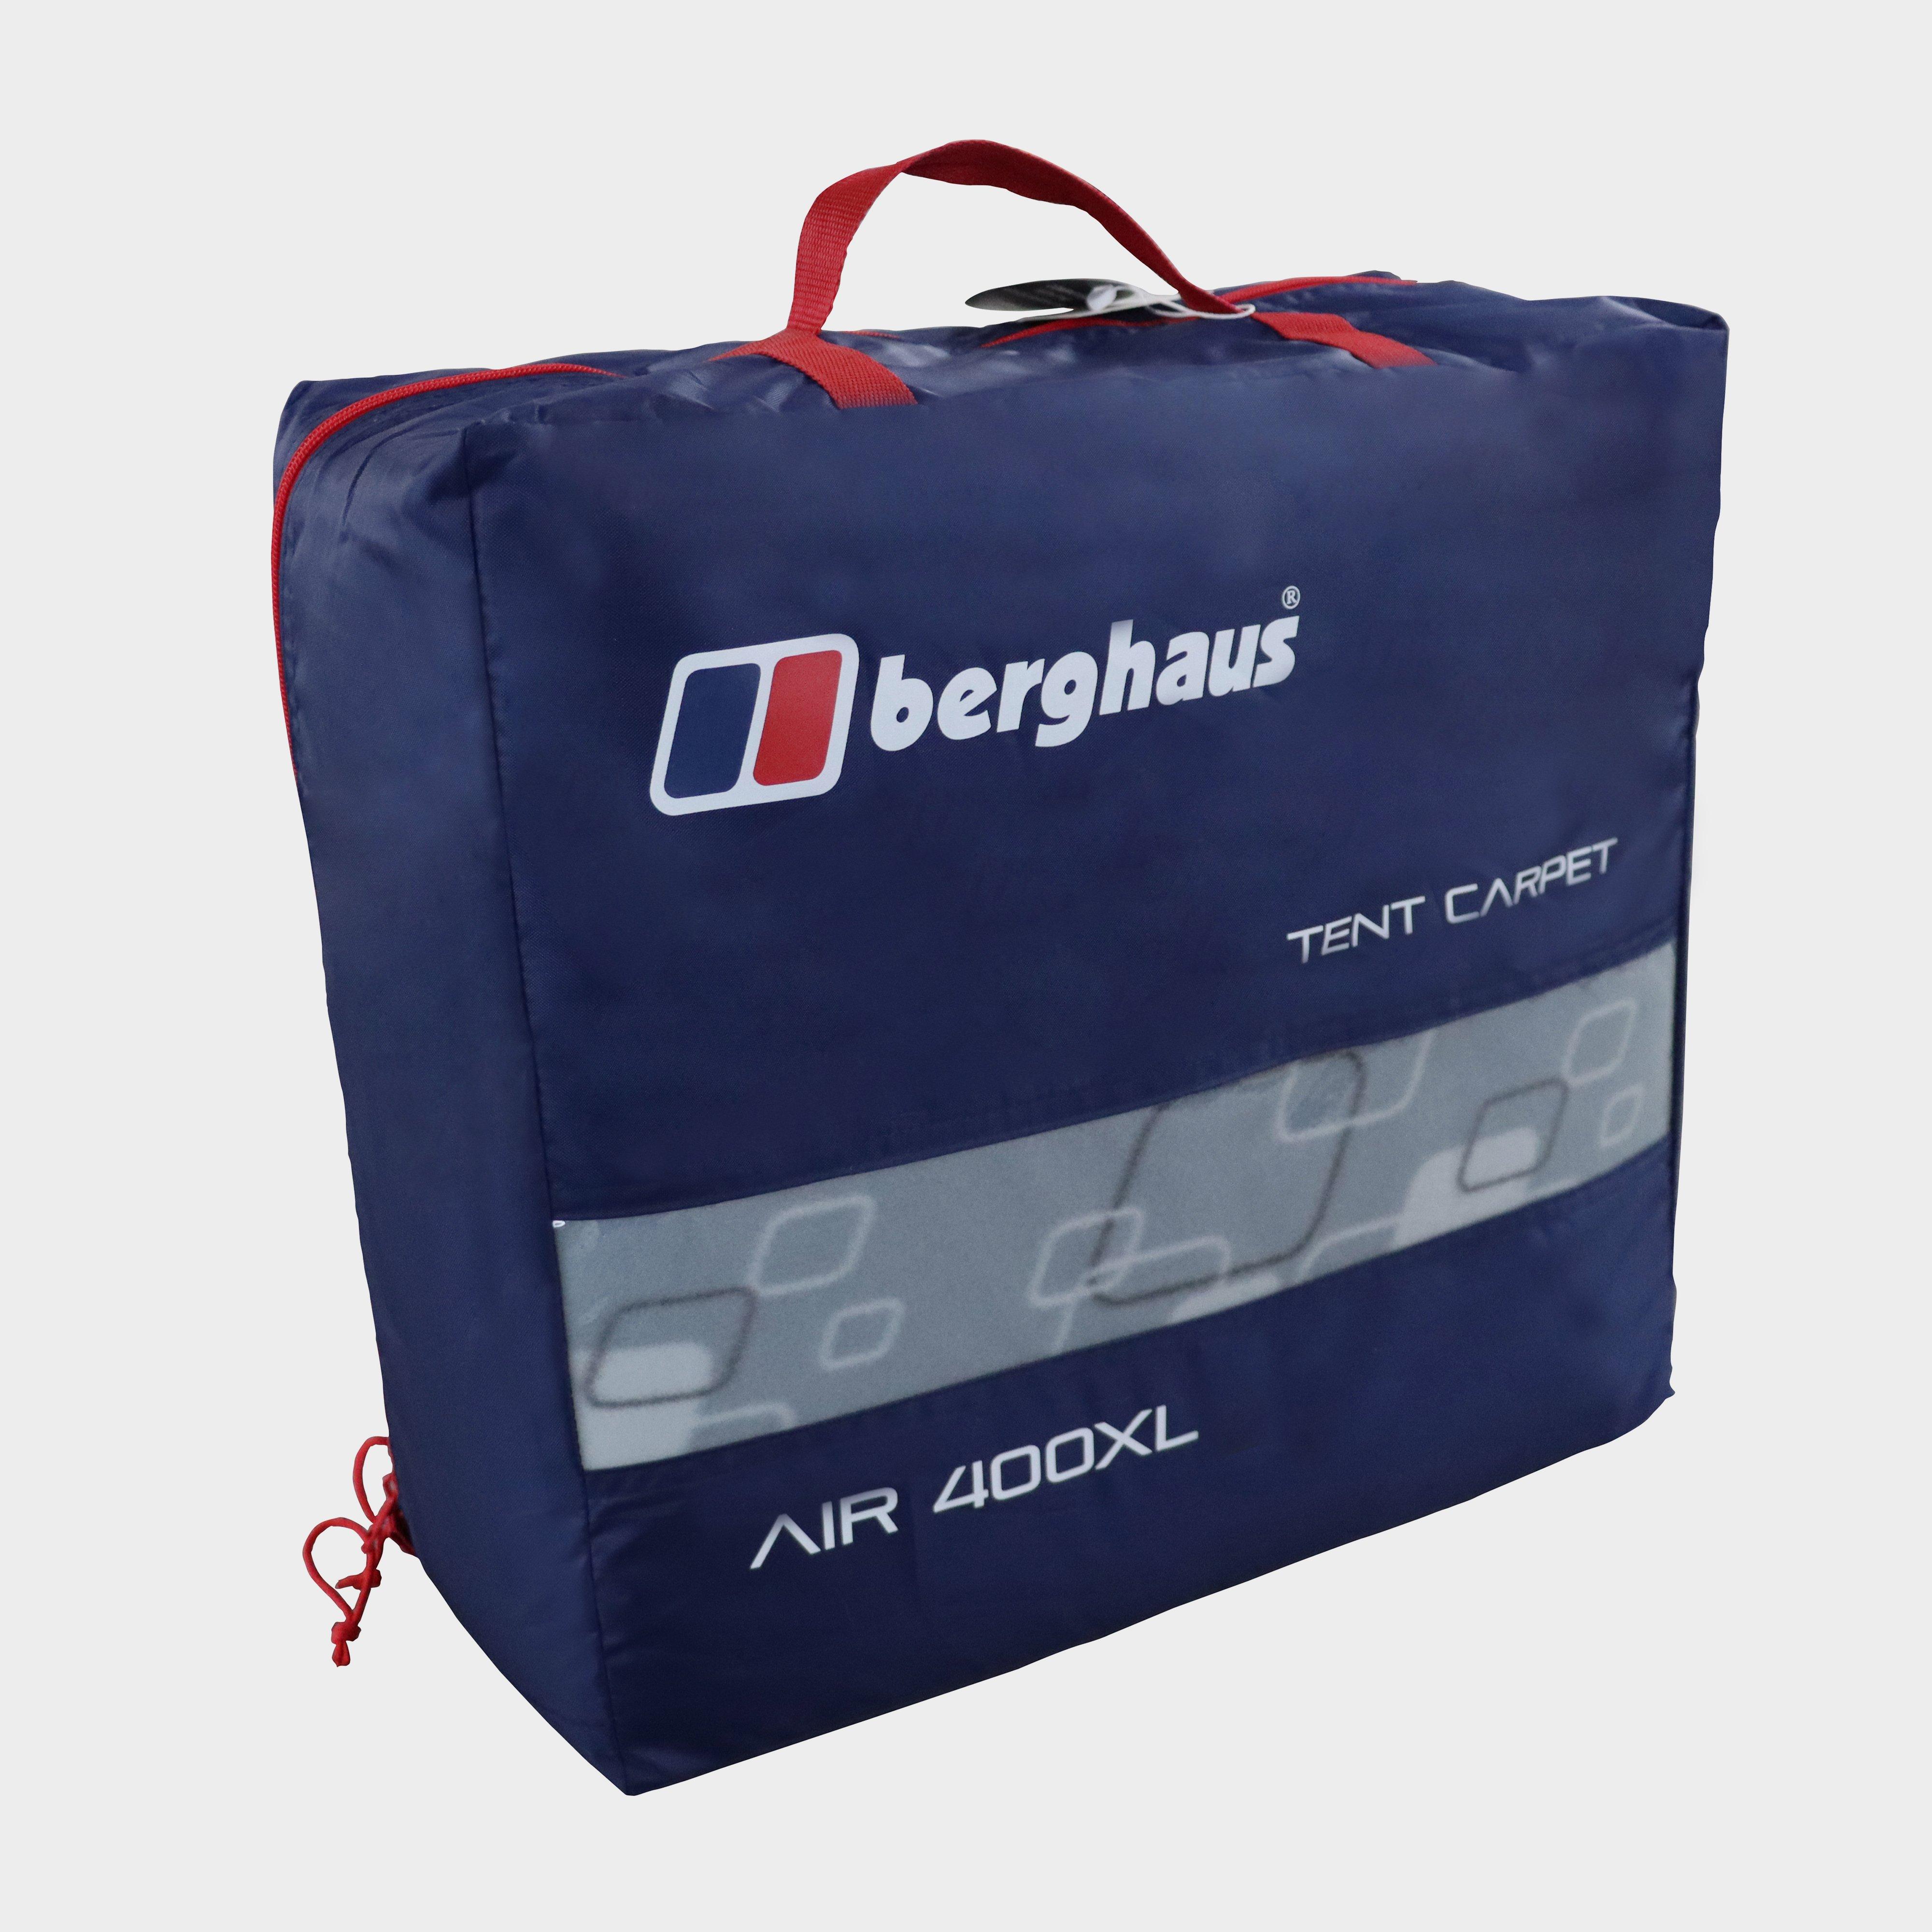 Berghaus Air 4xl Tent Carpet - Dark Grey  Dark Grey